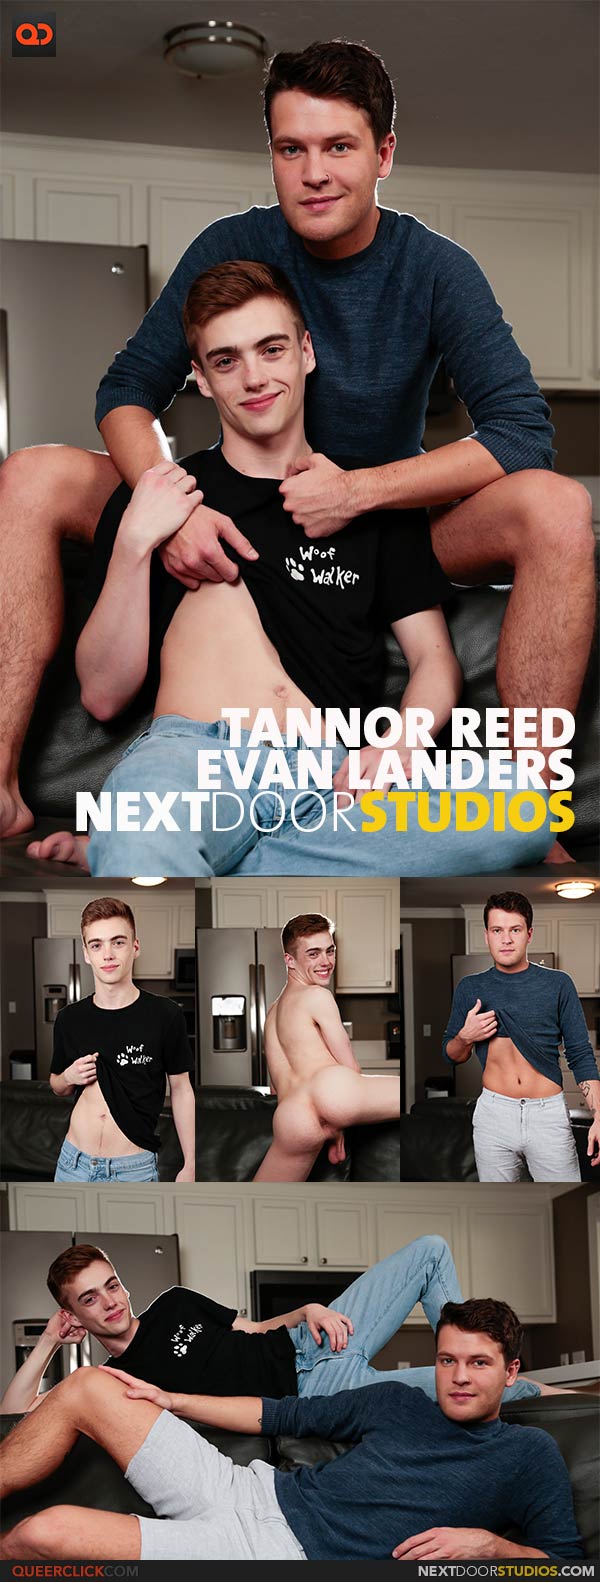 NextDoorStudios: Evan Landers and Tannor Reed